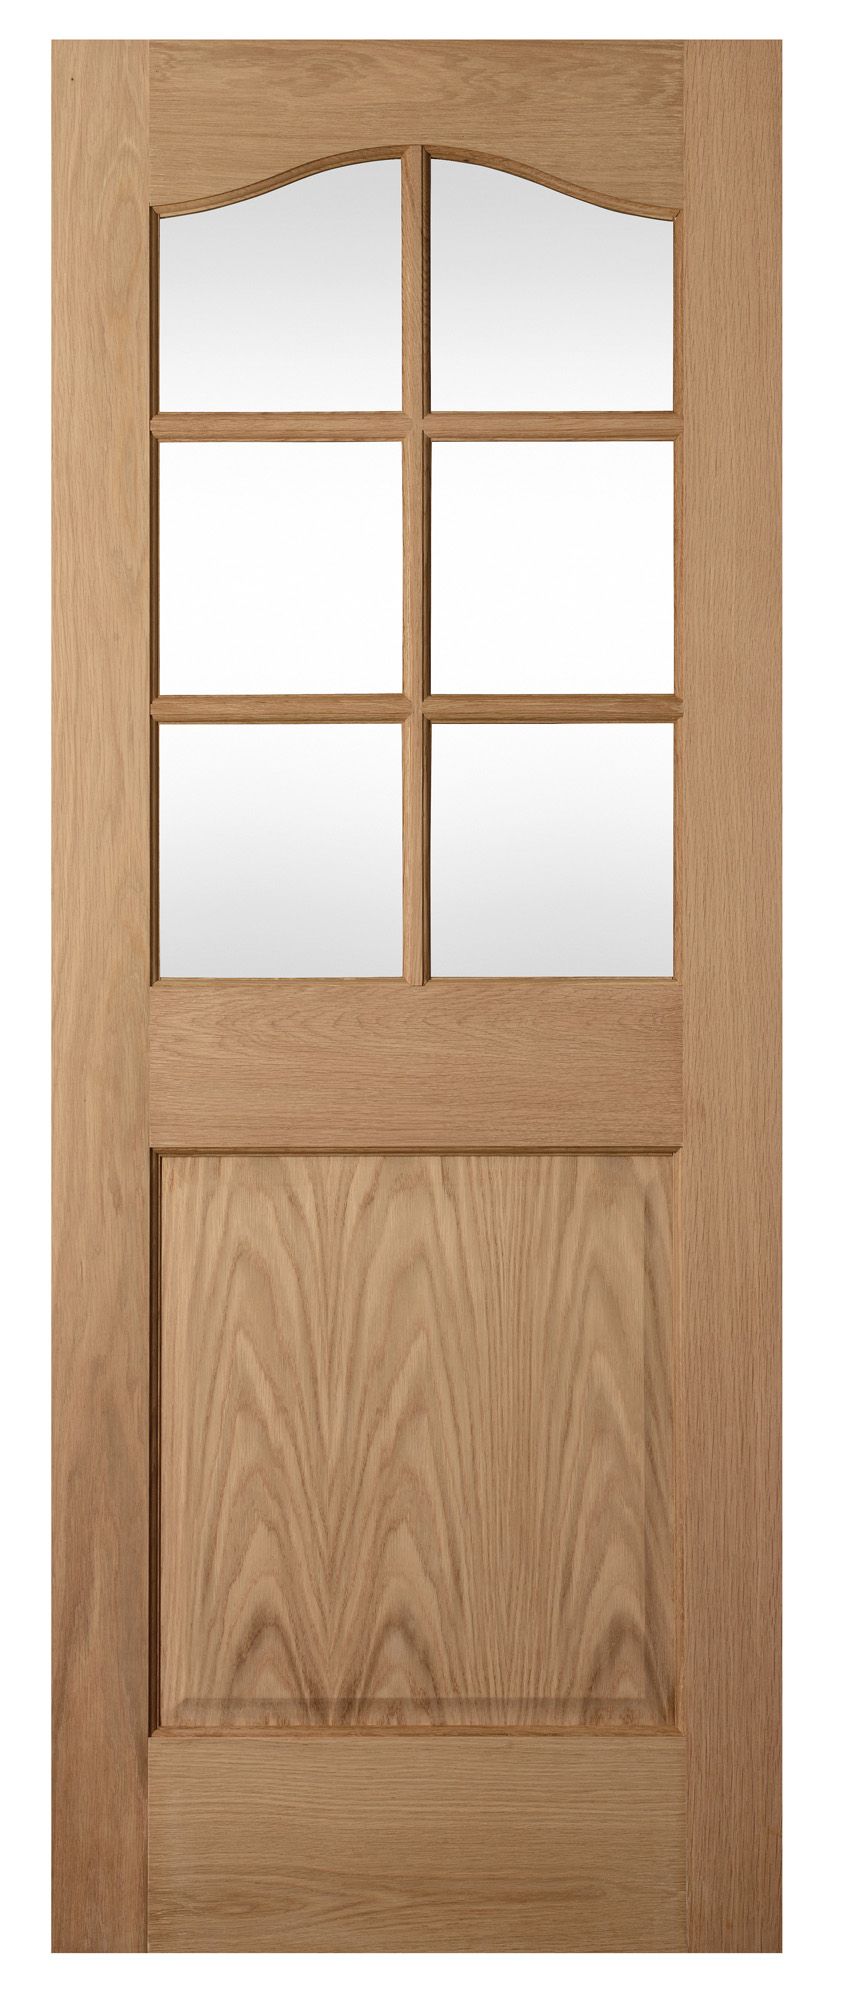 2 Panel Arched Oak Veneer Internal Door H 1981mm W 838mm Departments Diy At B Q